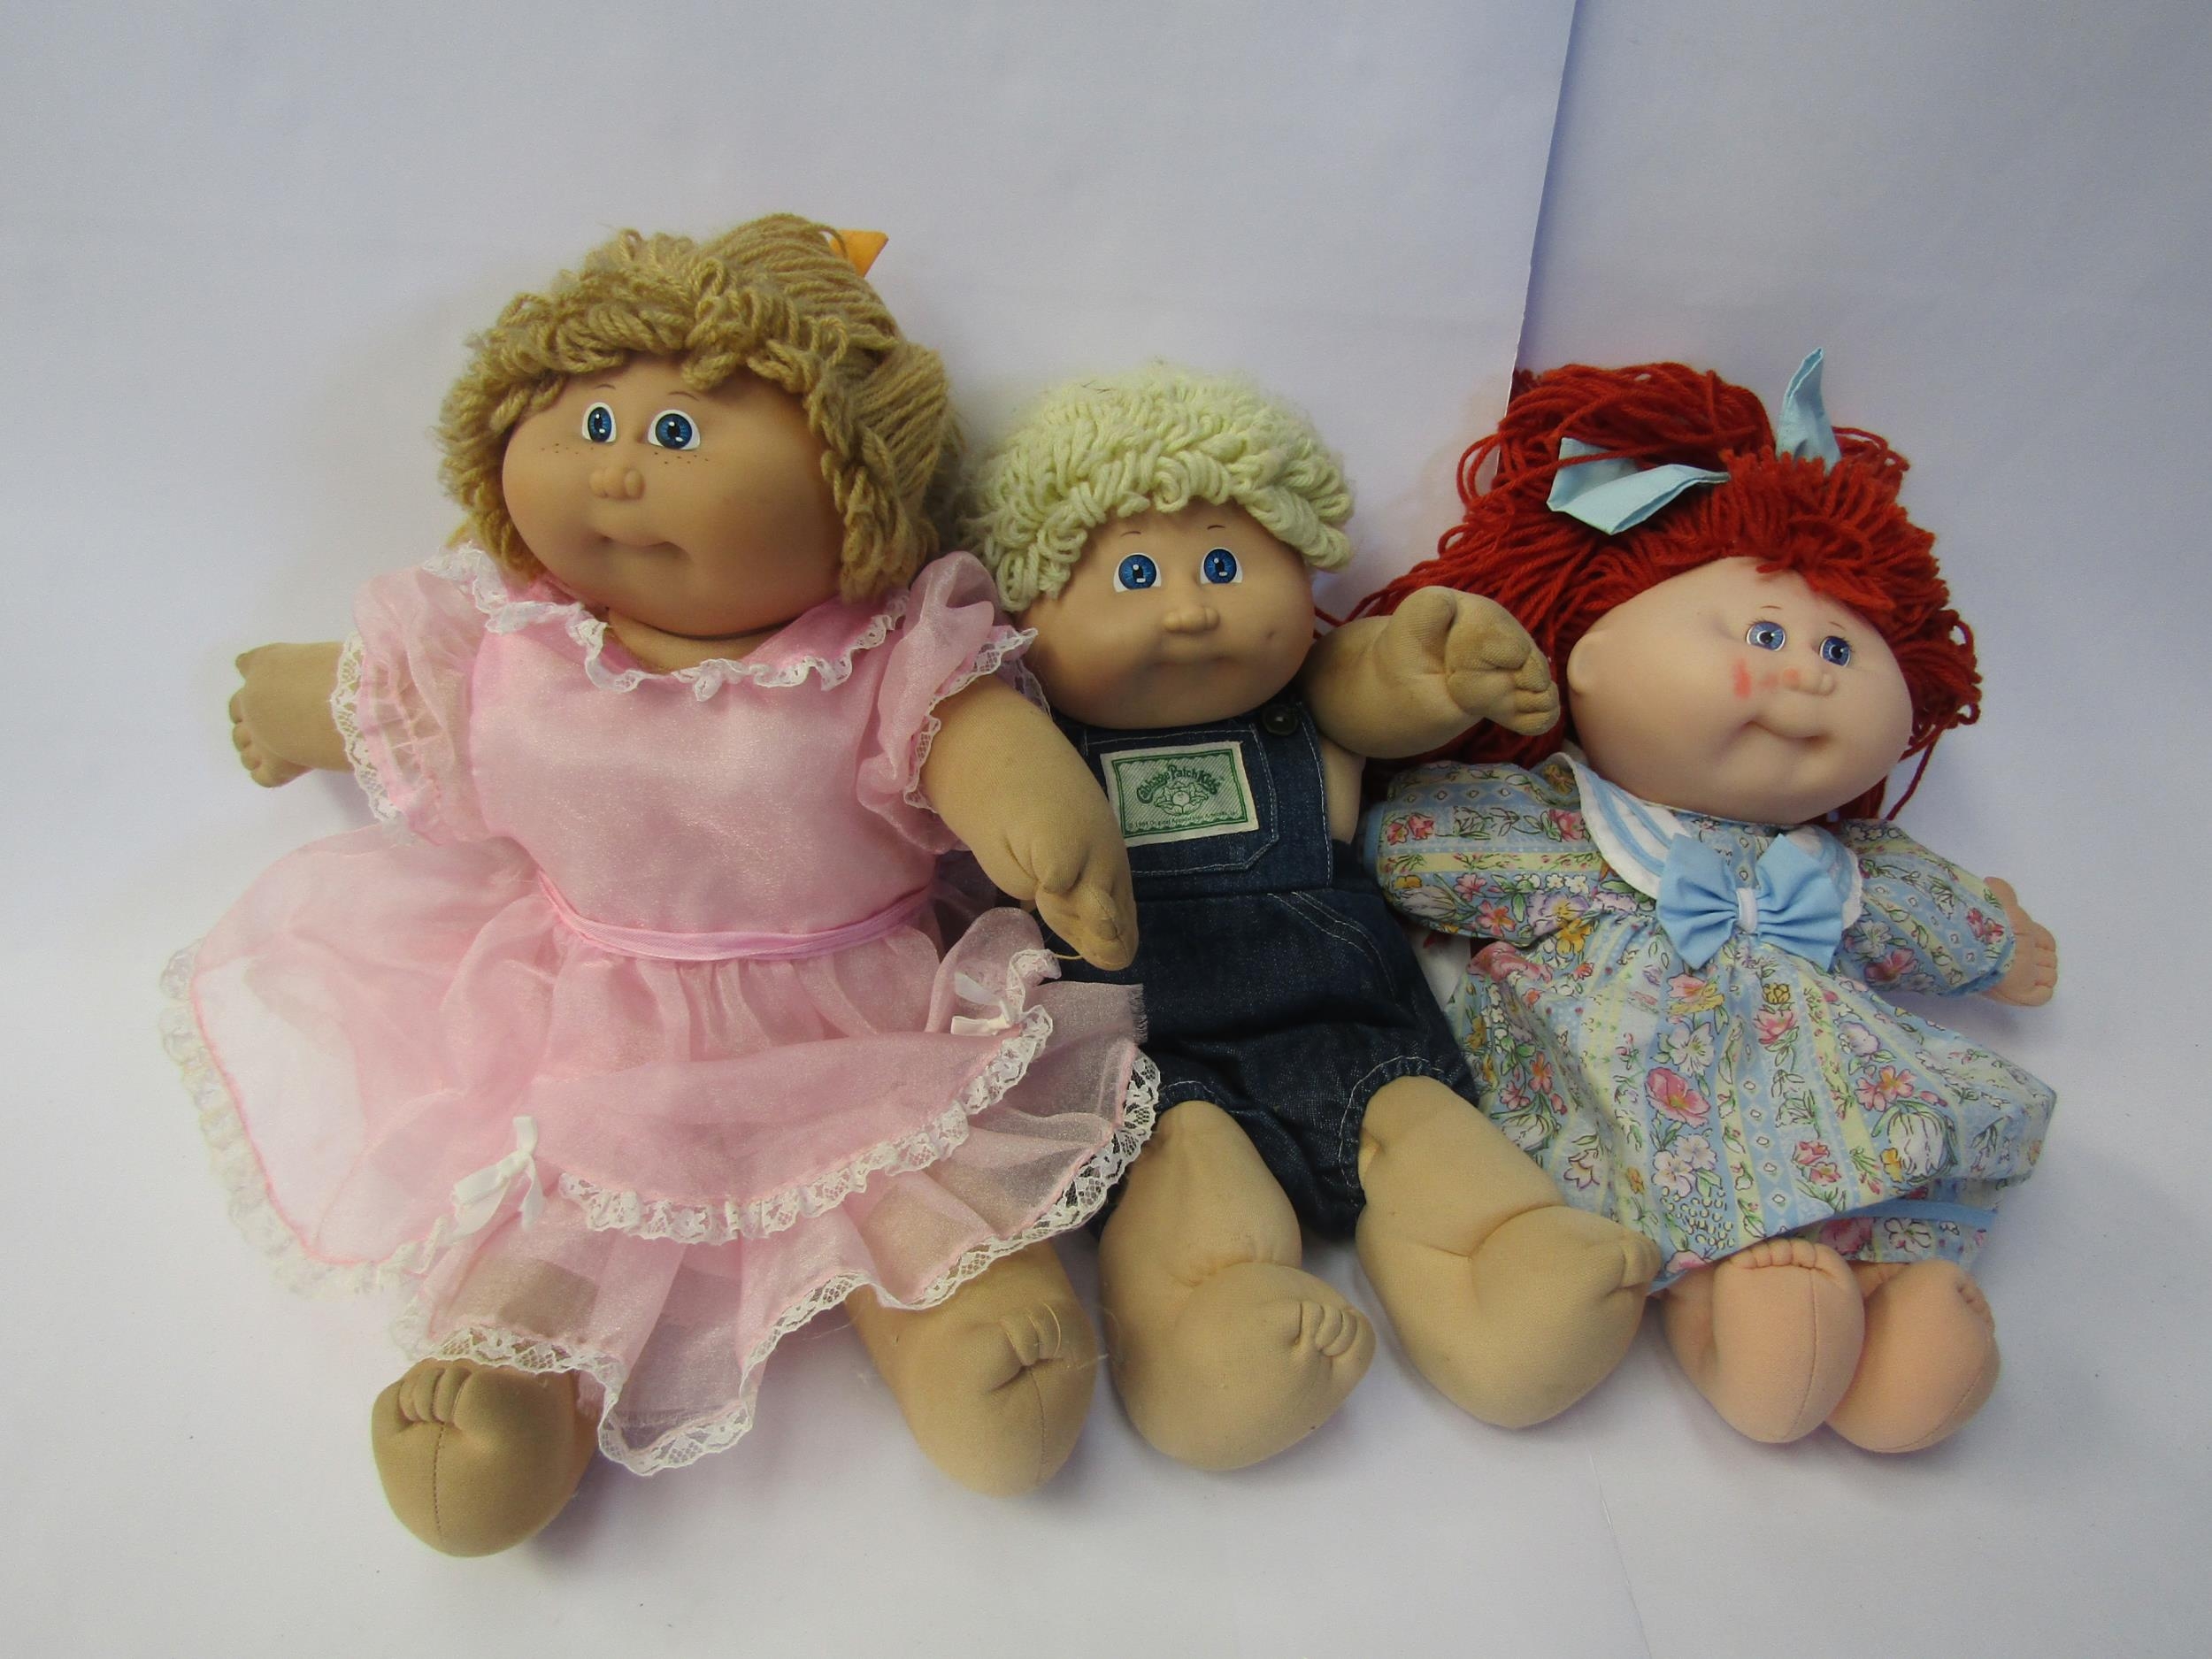 Three Cabbage Patch Kids dolls